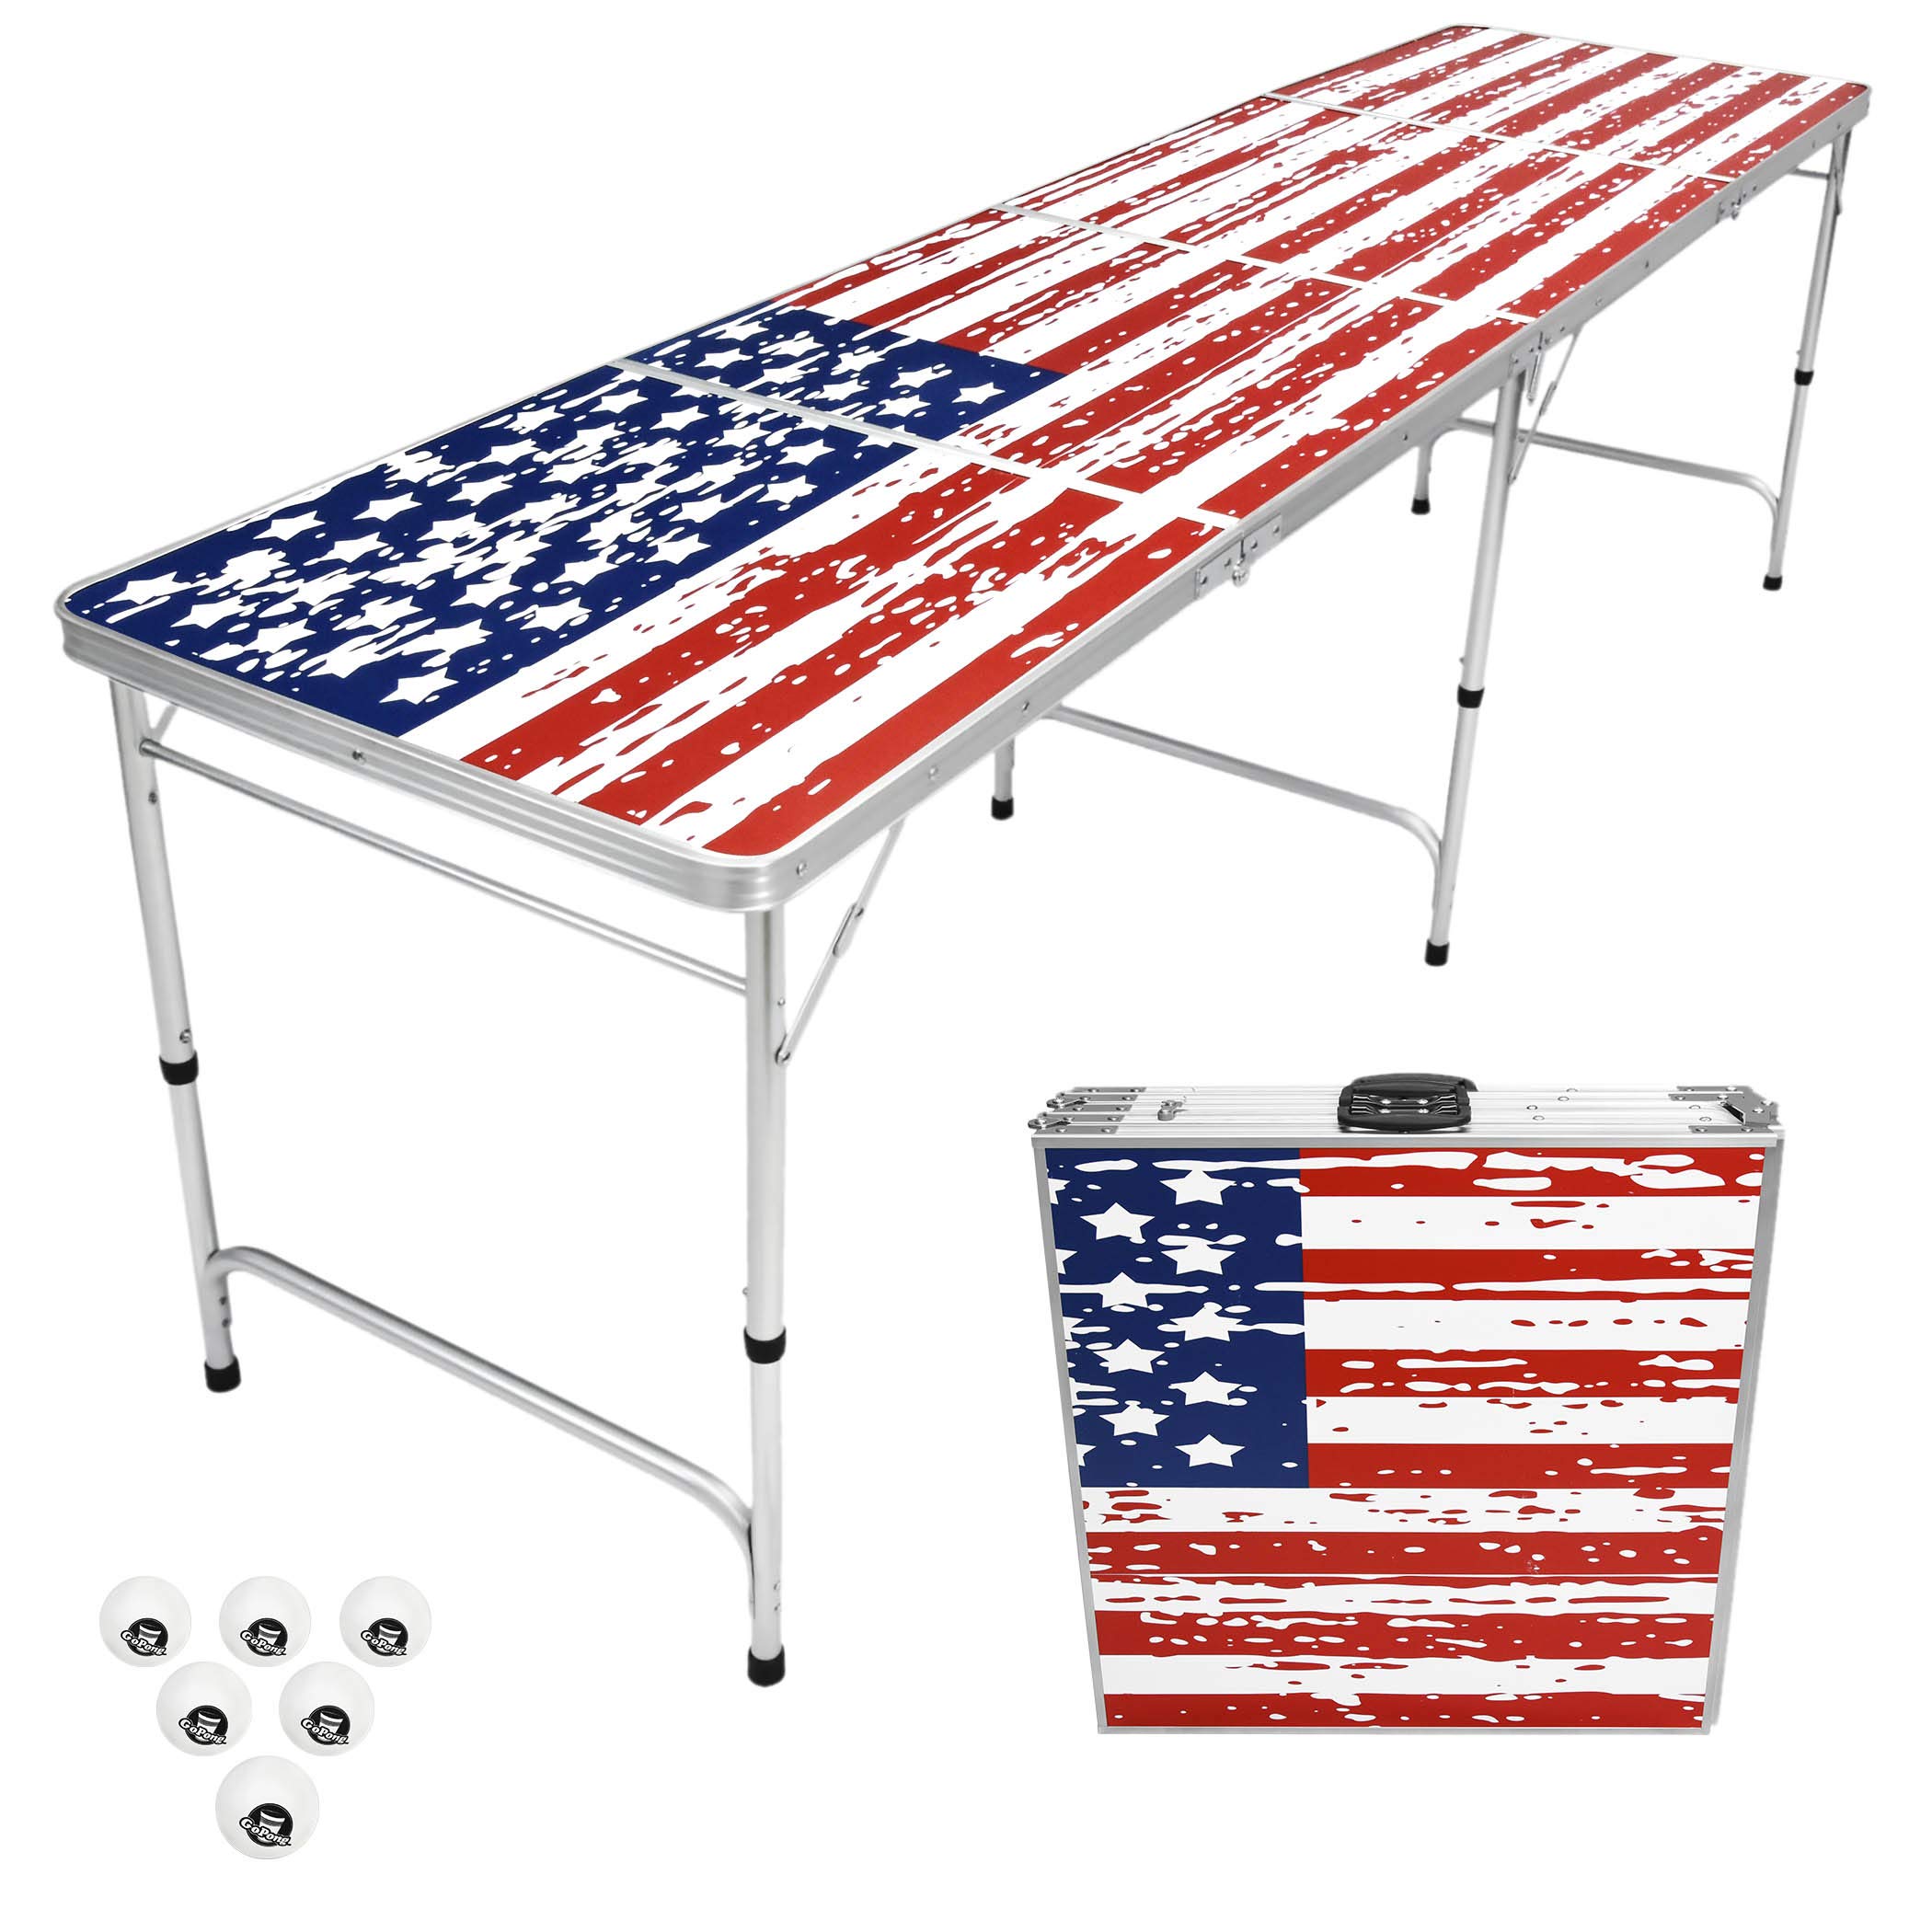 GoPong 8 Foot Portable Beer Pong / Tailgate Tables (Black, Football, American Flag, or Custom Dry Erase)